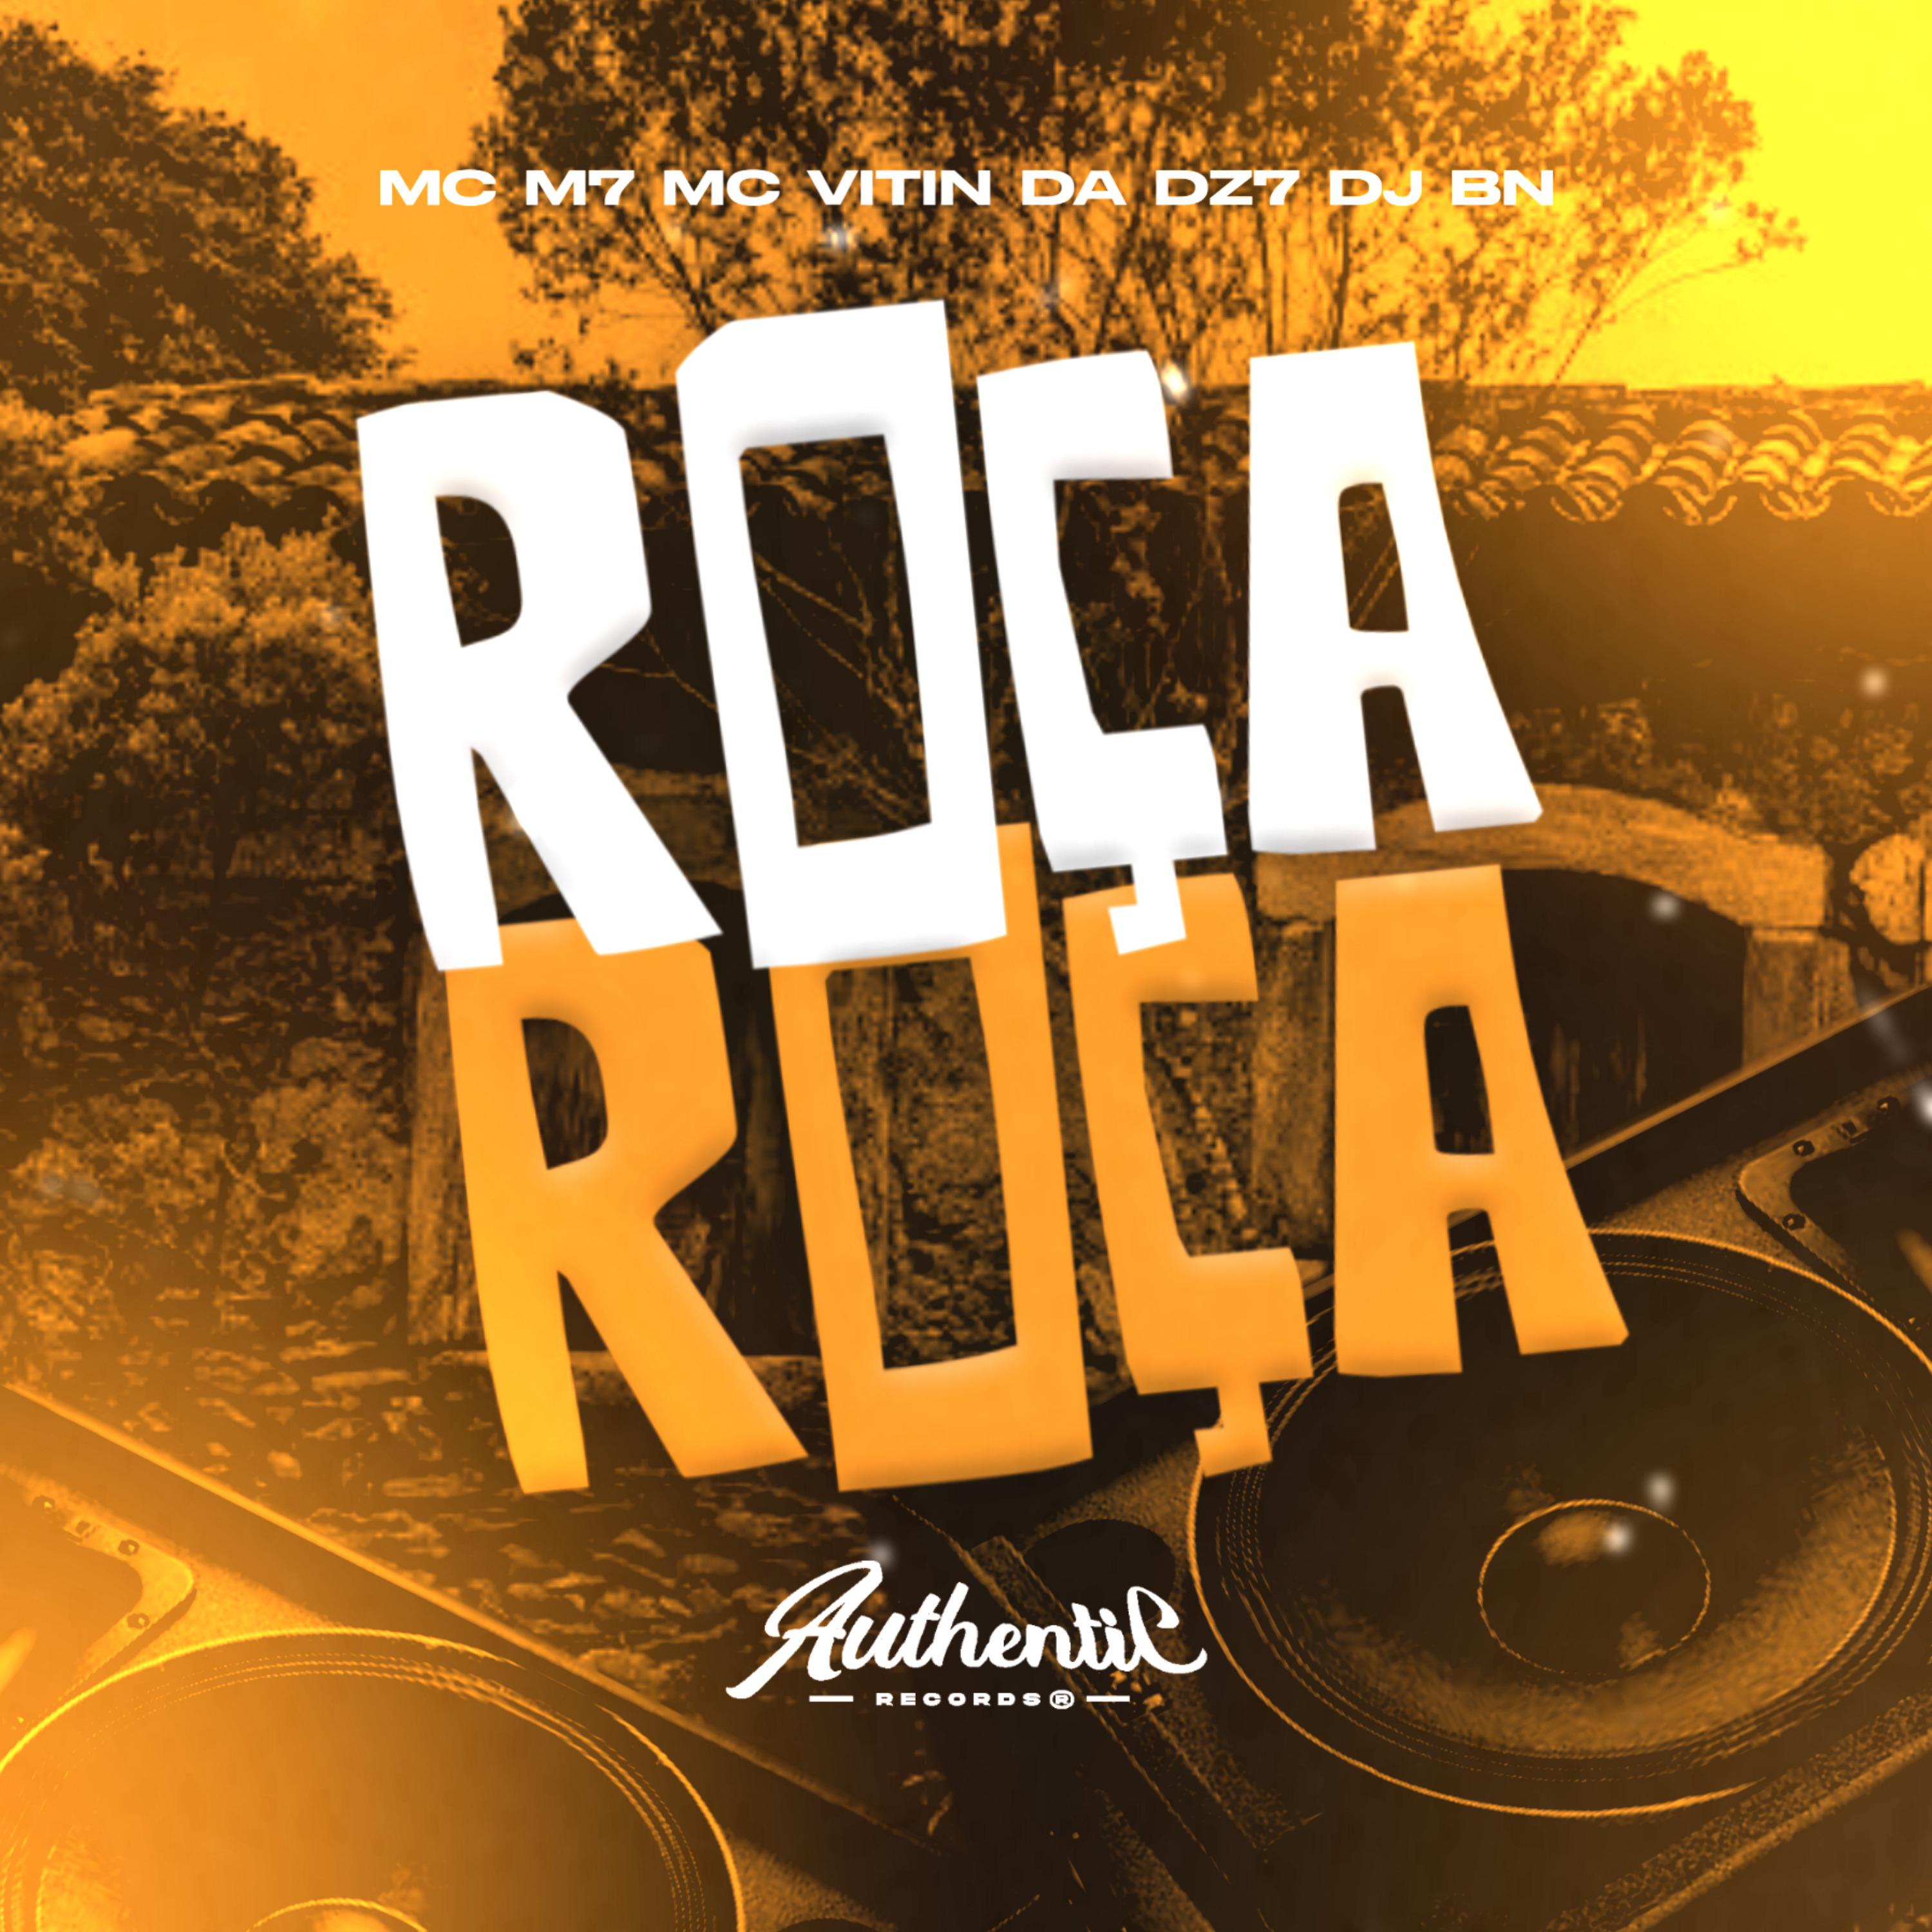 Постер альбома Roça Roça